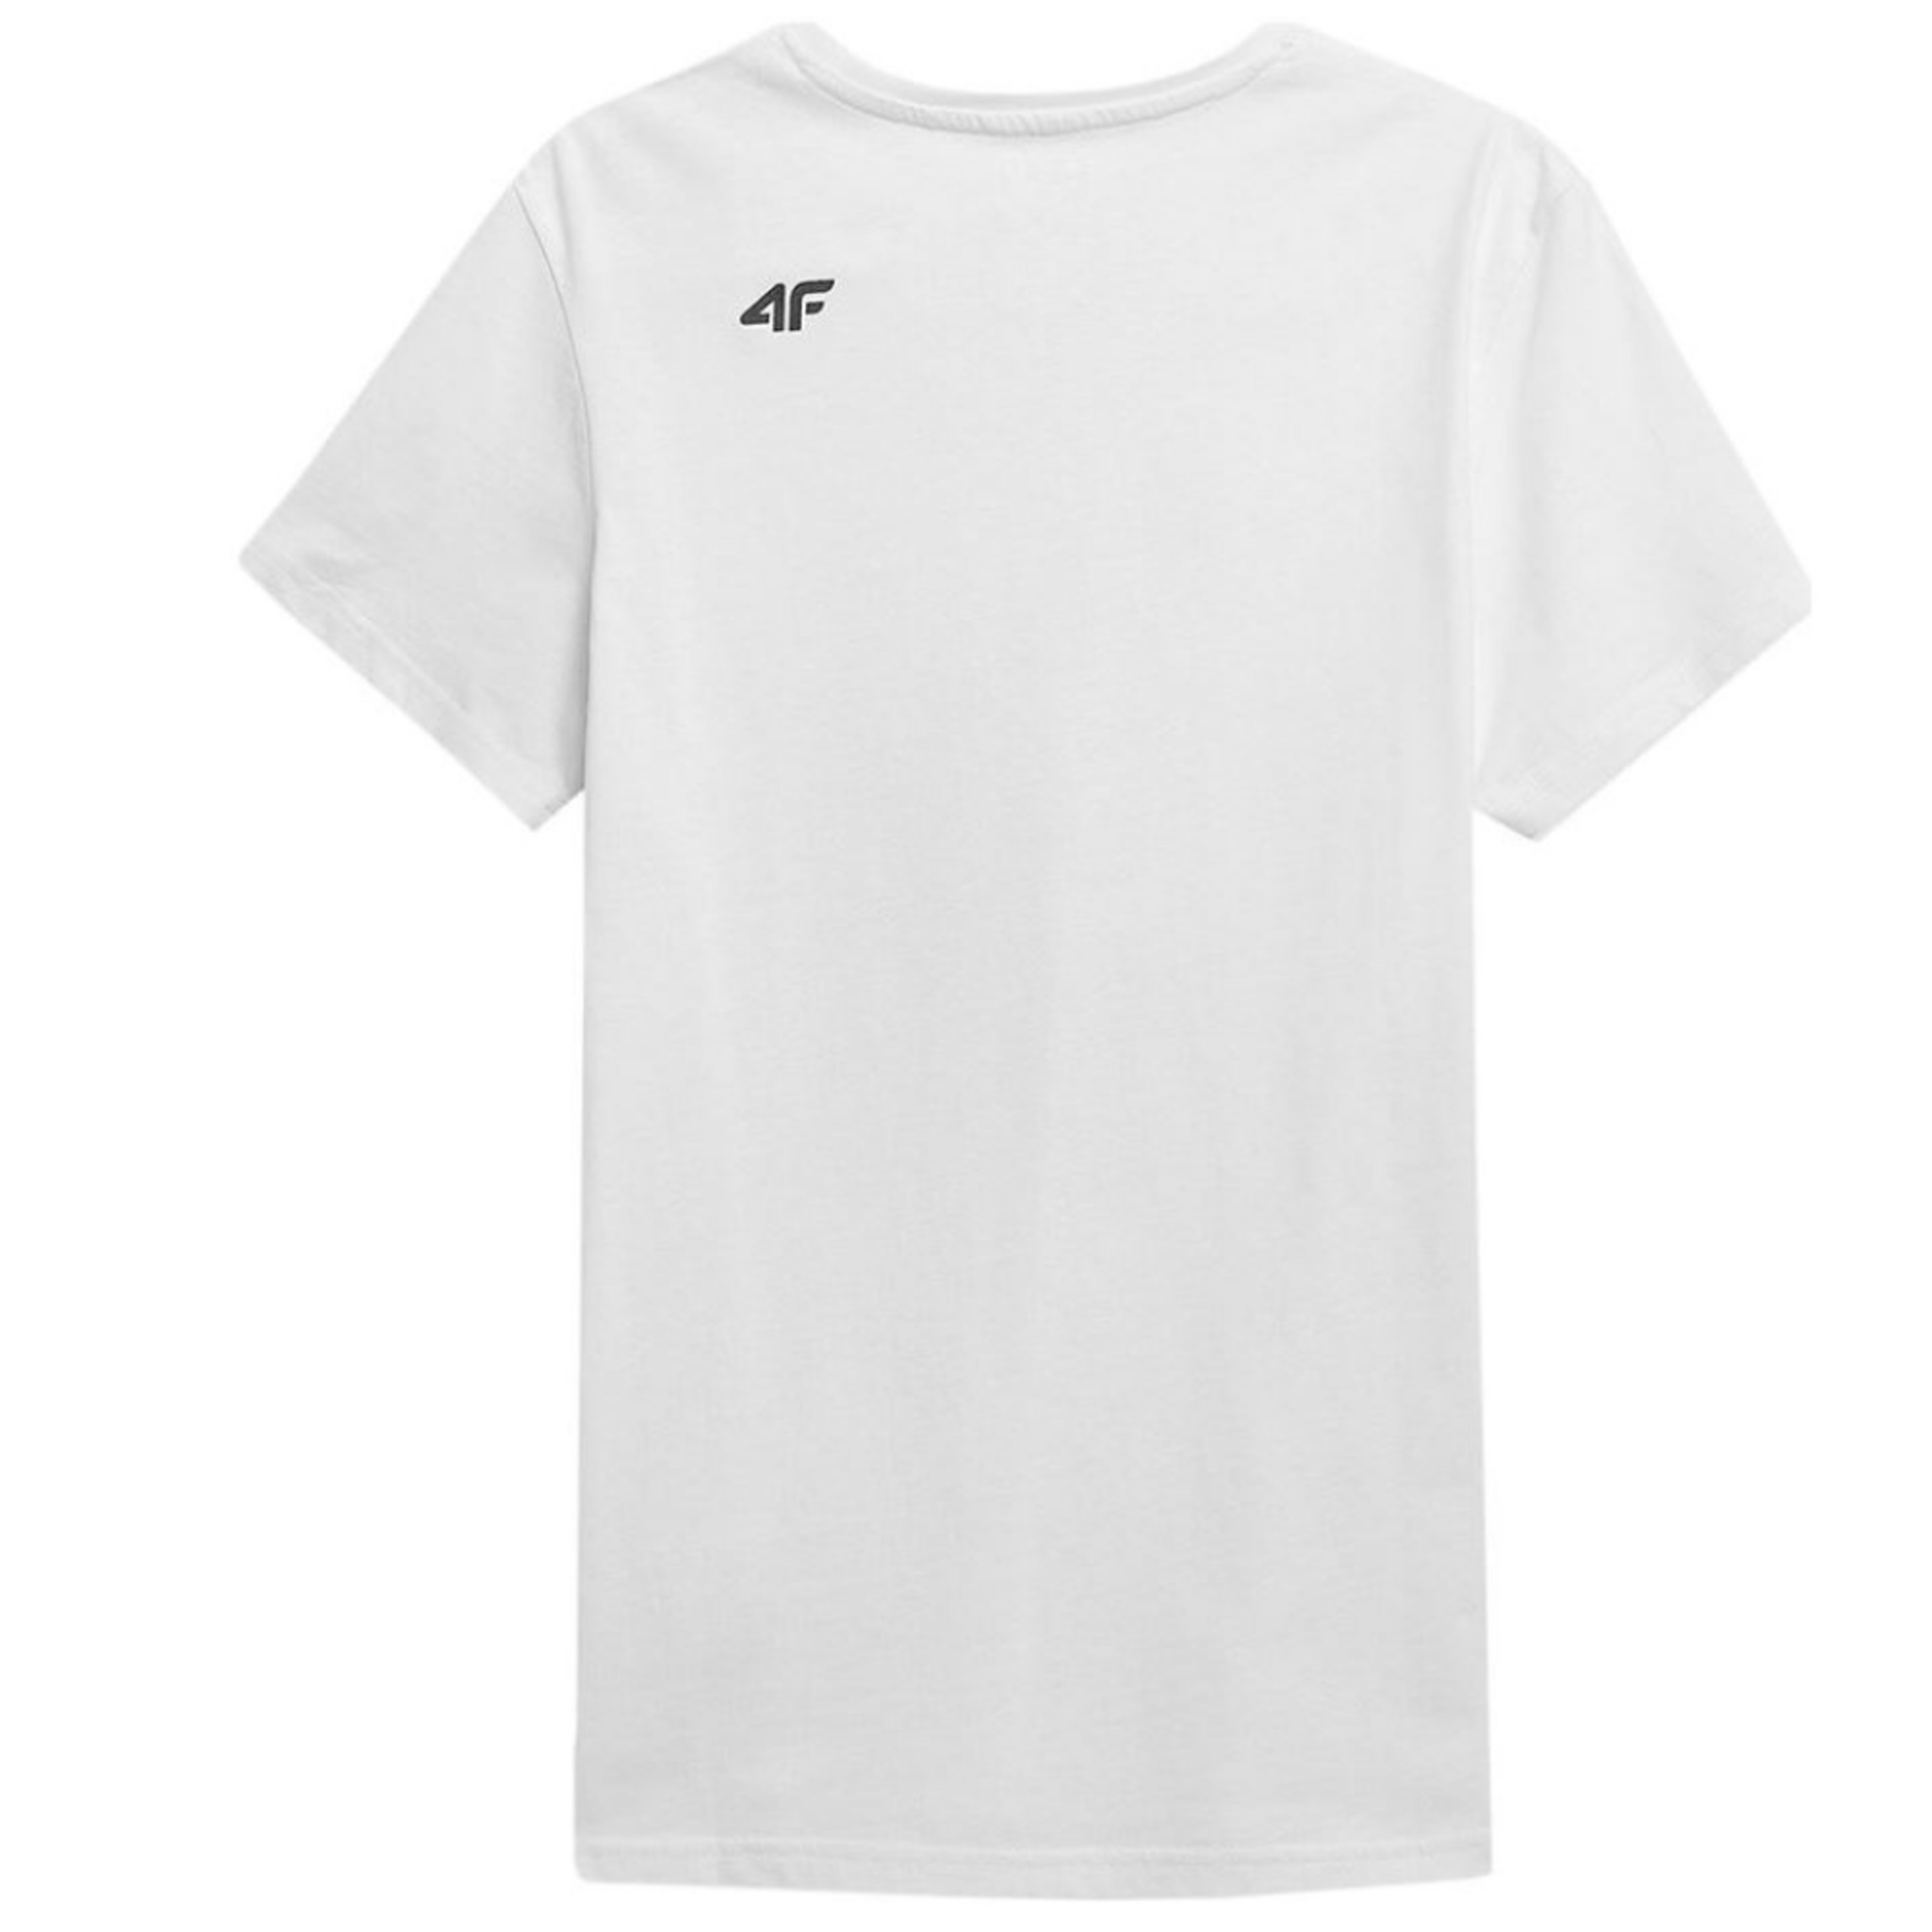 4f Camiseta Con Estampado Tsm018-10s - Blanco - Camiseta Manga Corta Hombre.  MKP